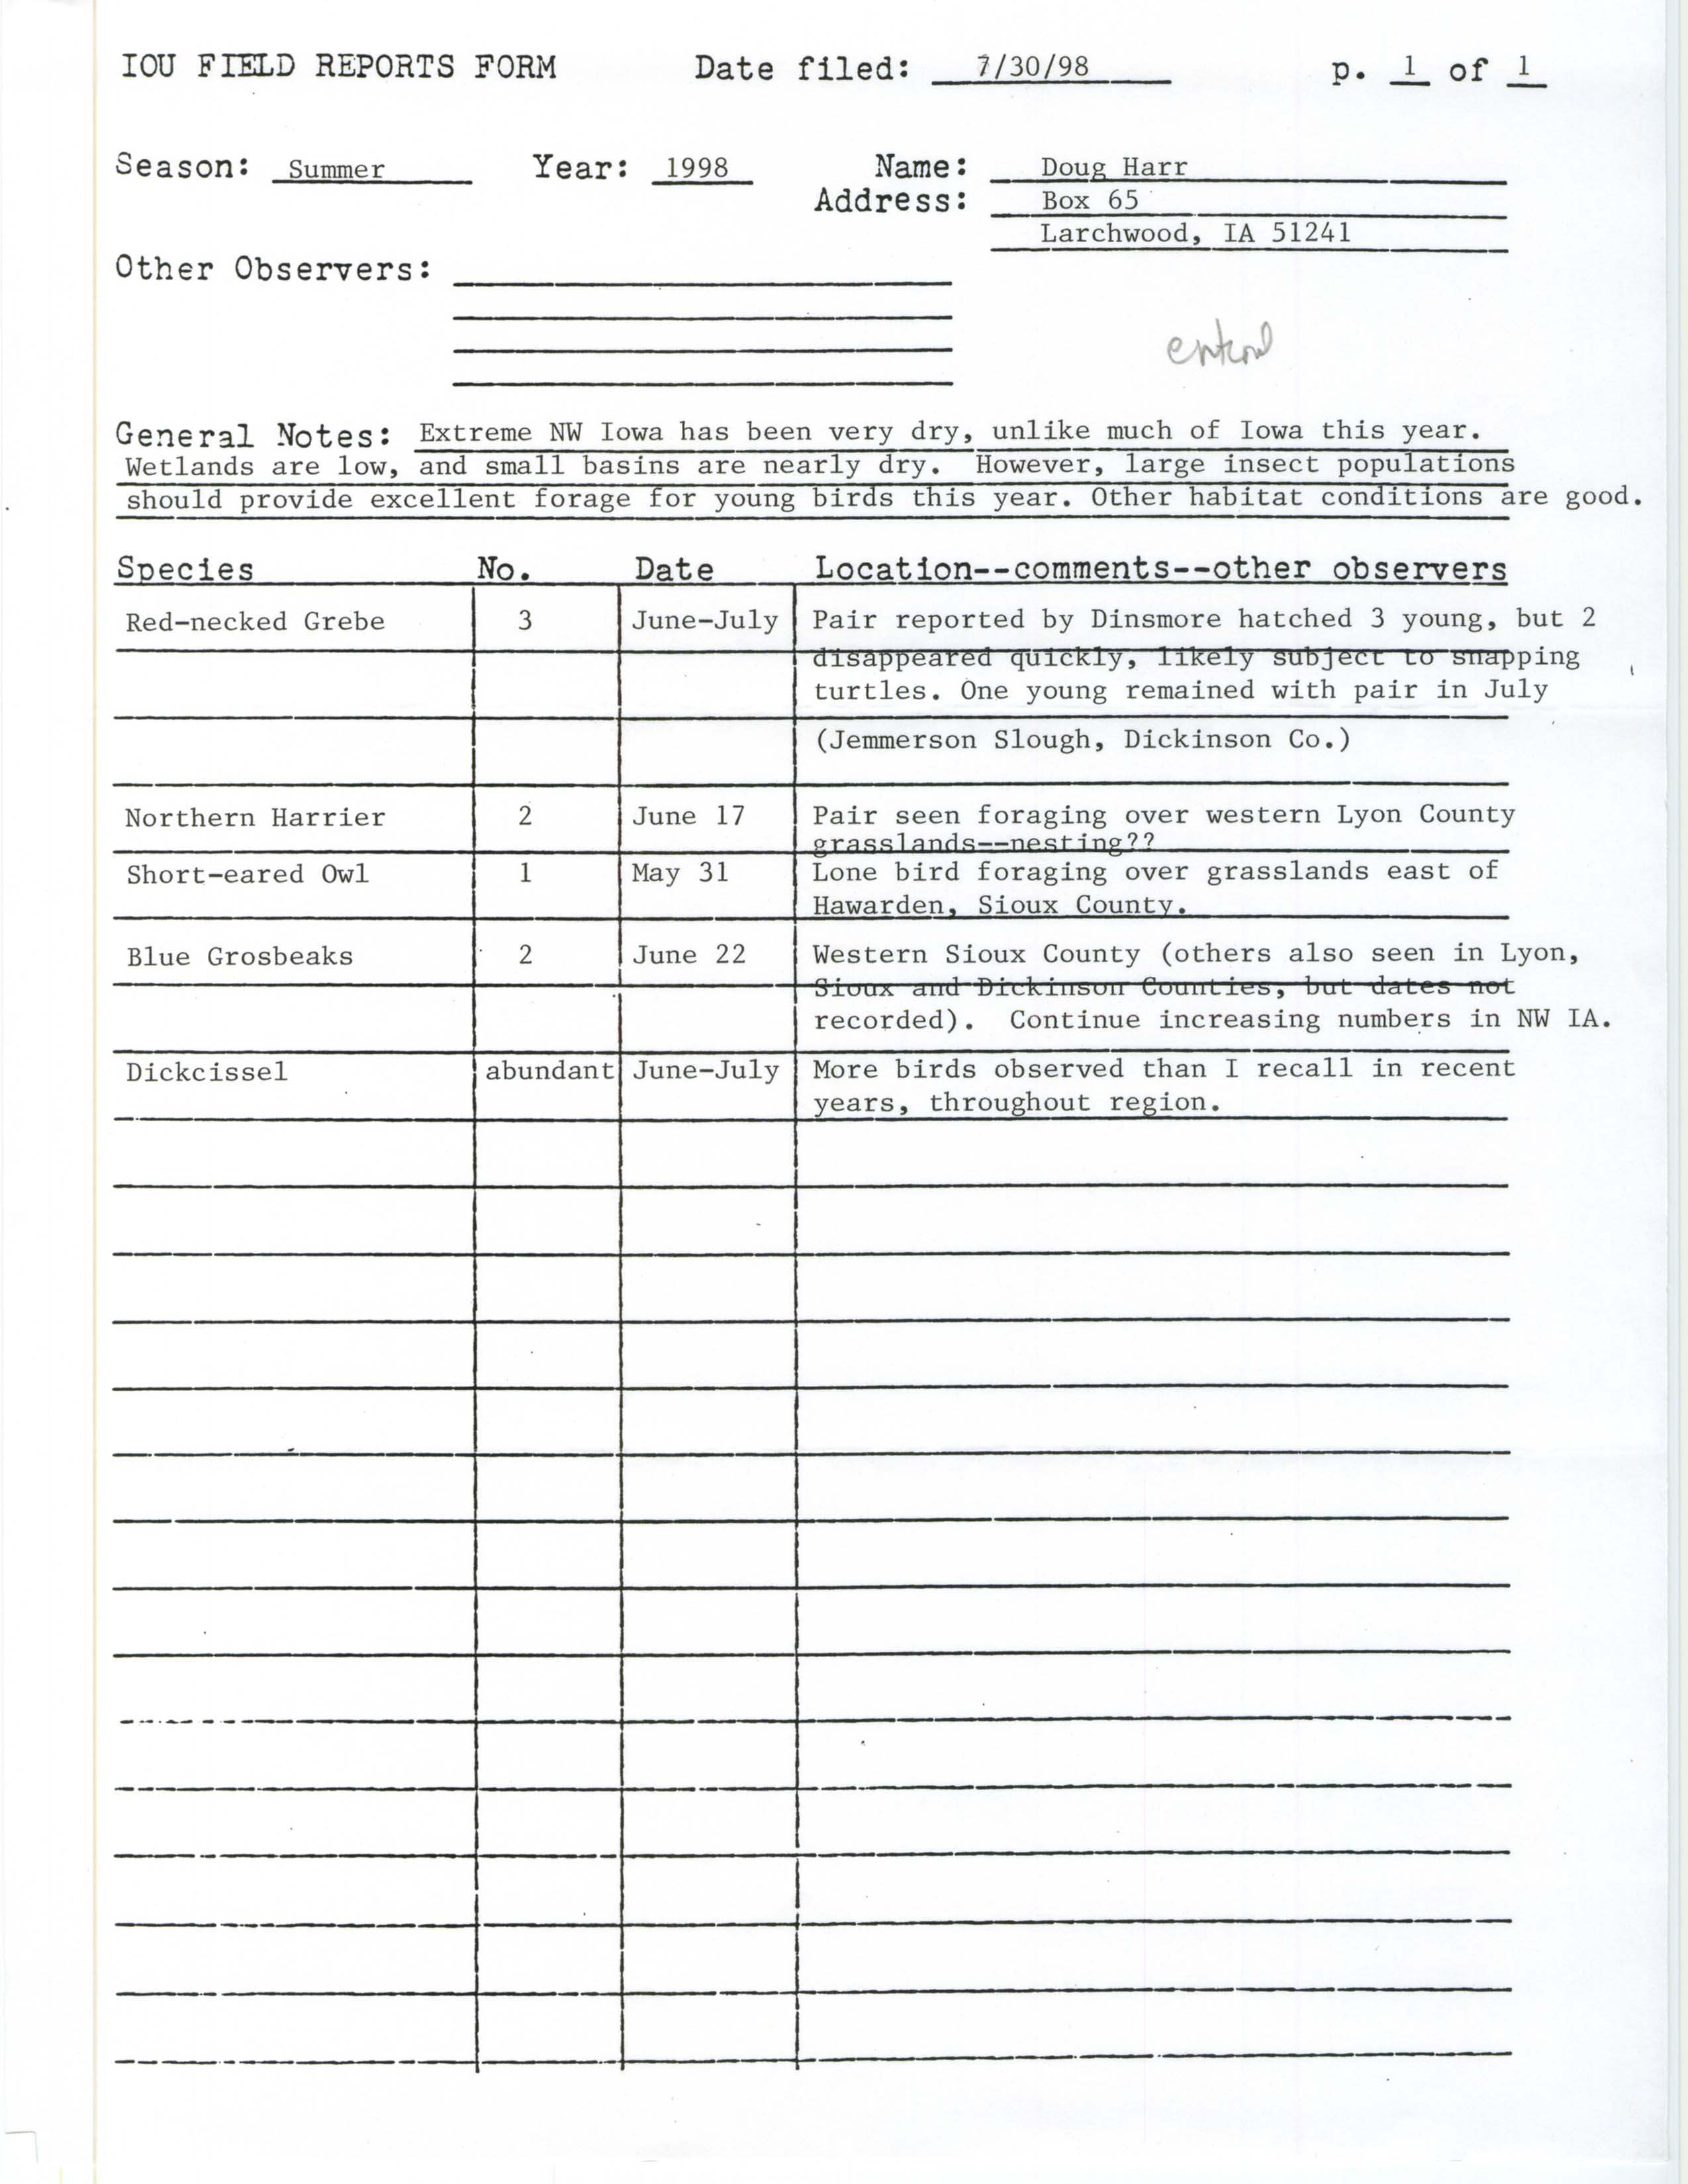 IOU field reports form, Doug Harr, July 30, 1998